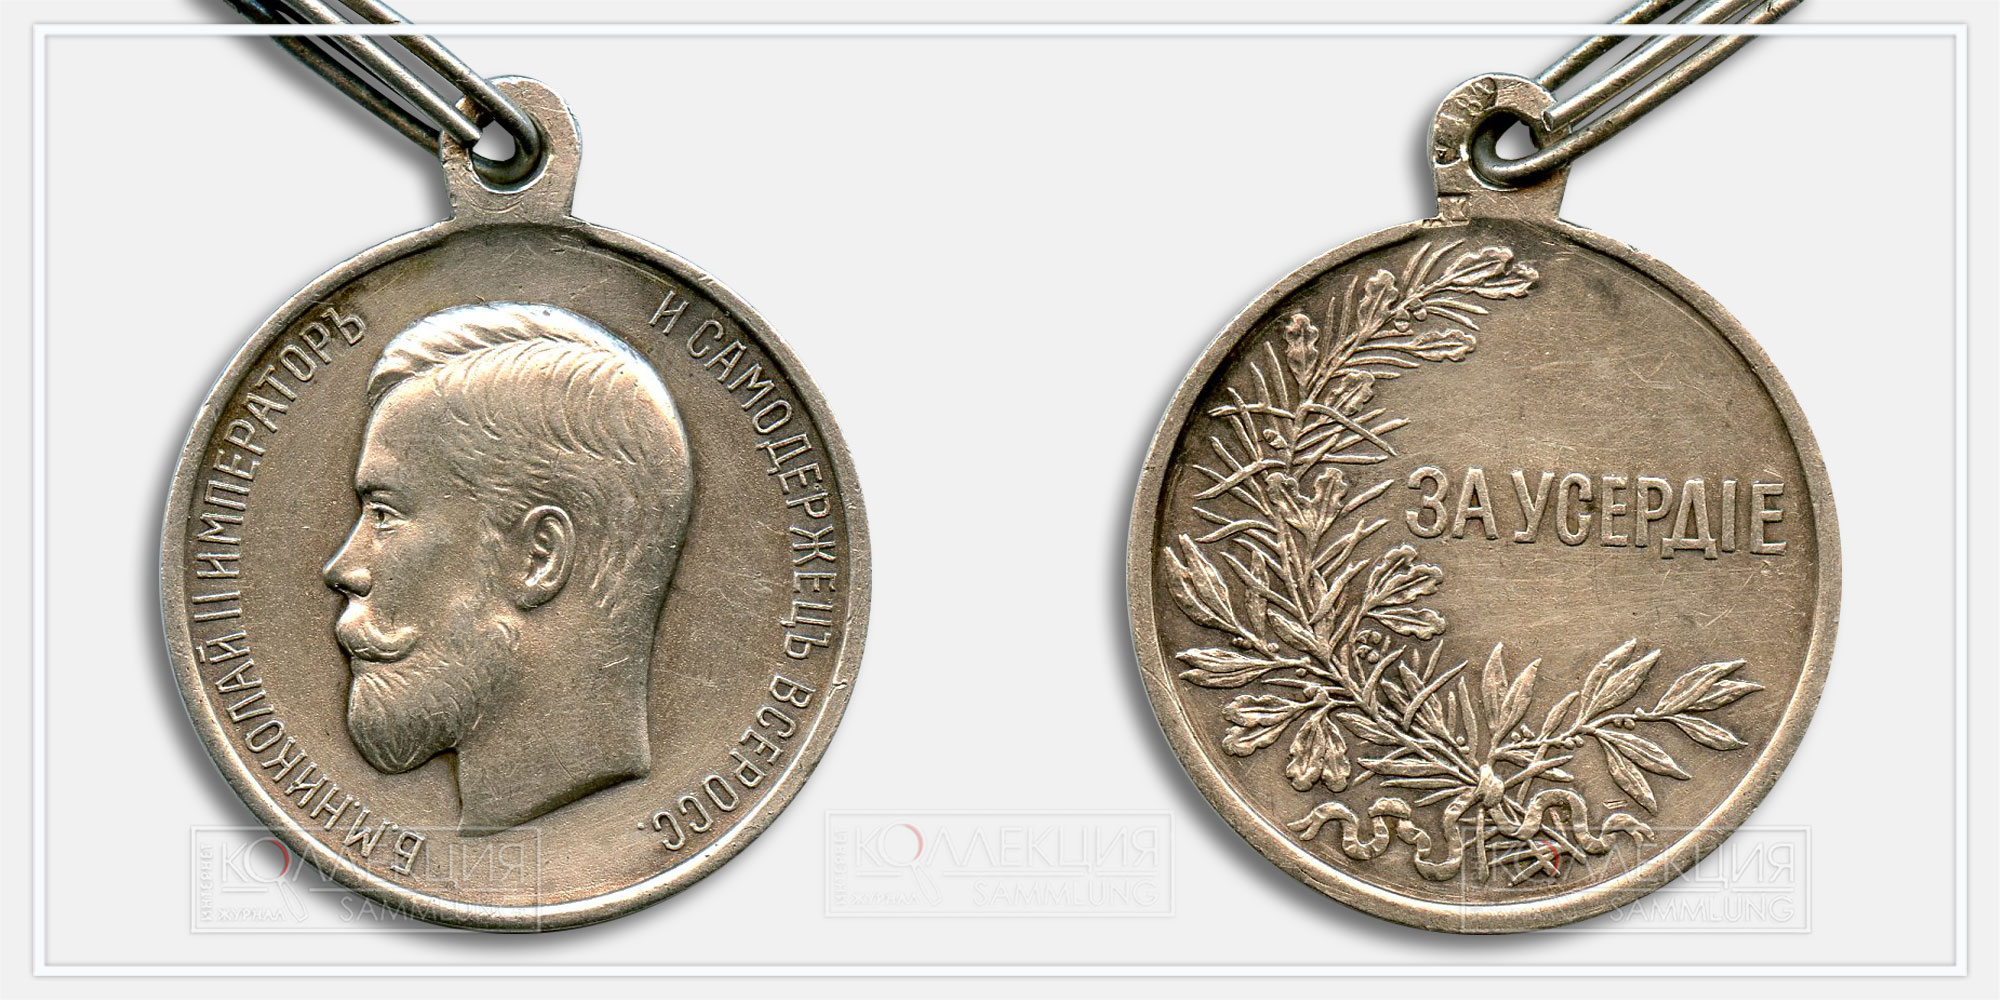 Медаль "За усердие" Николай II Кучкин